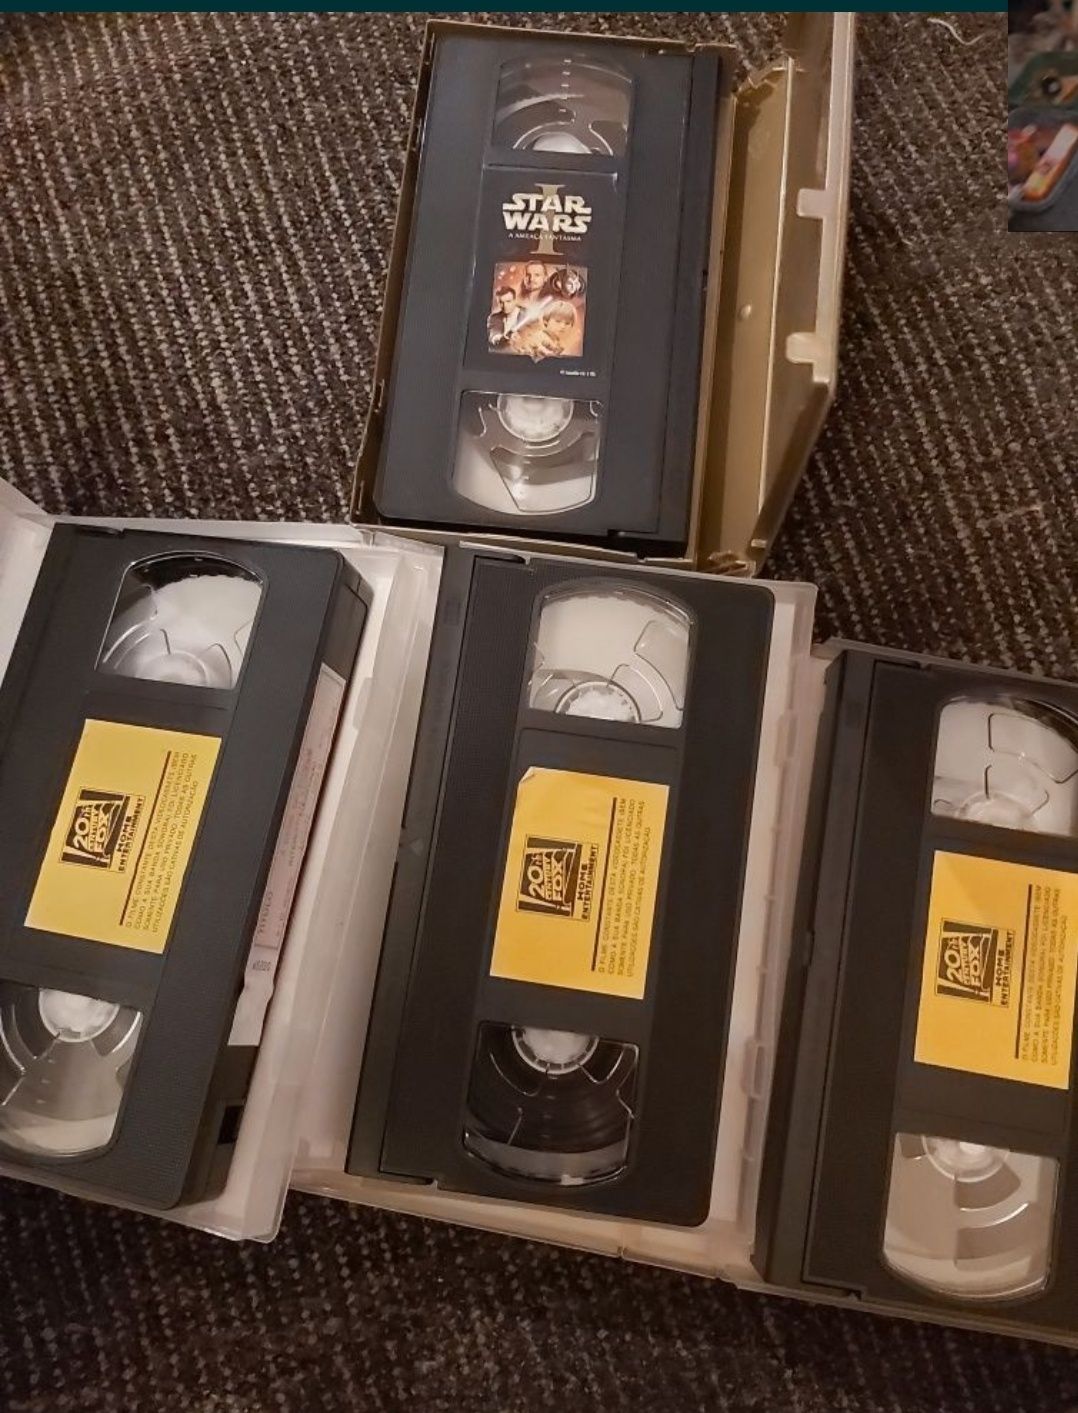 Star Wars 4 VHS como novos. Para coleccionador.